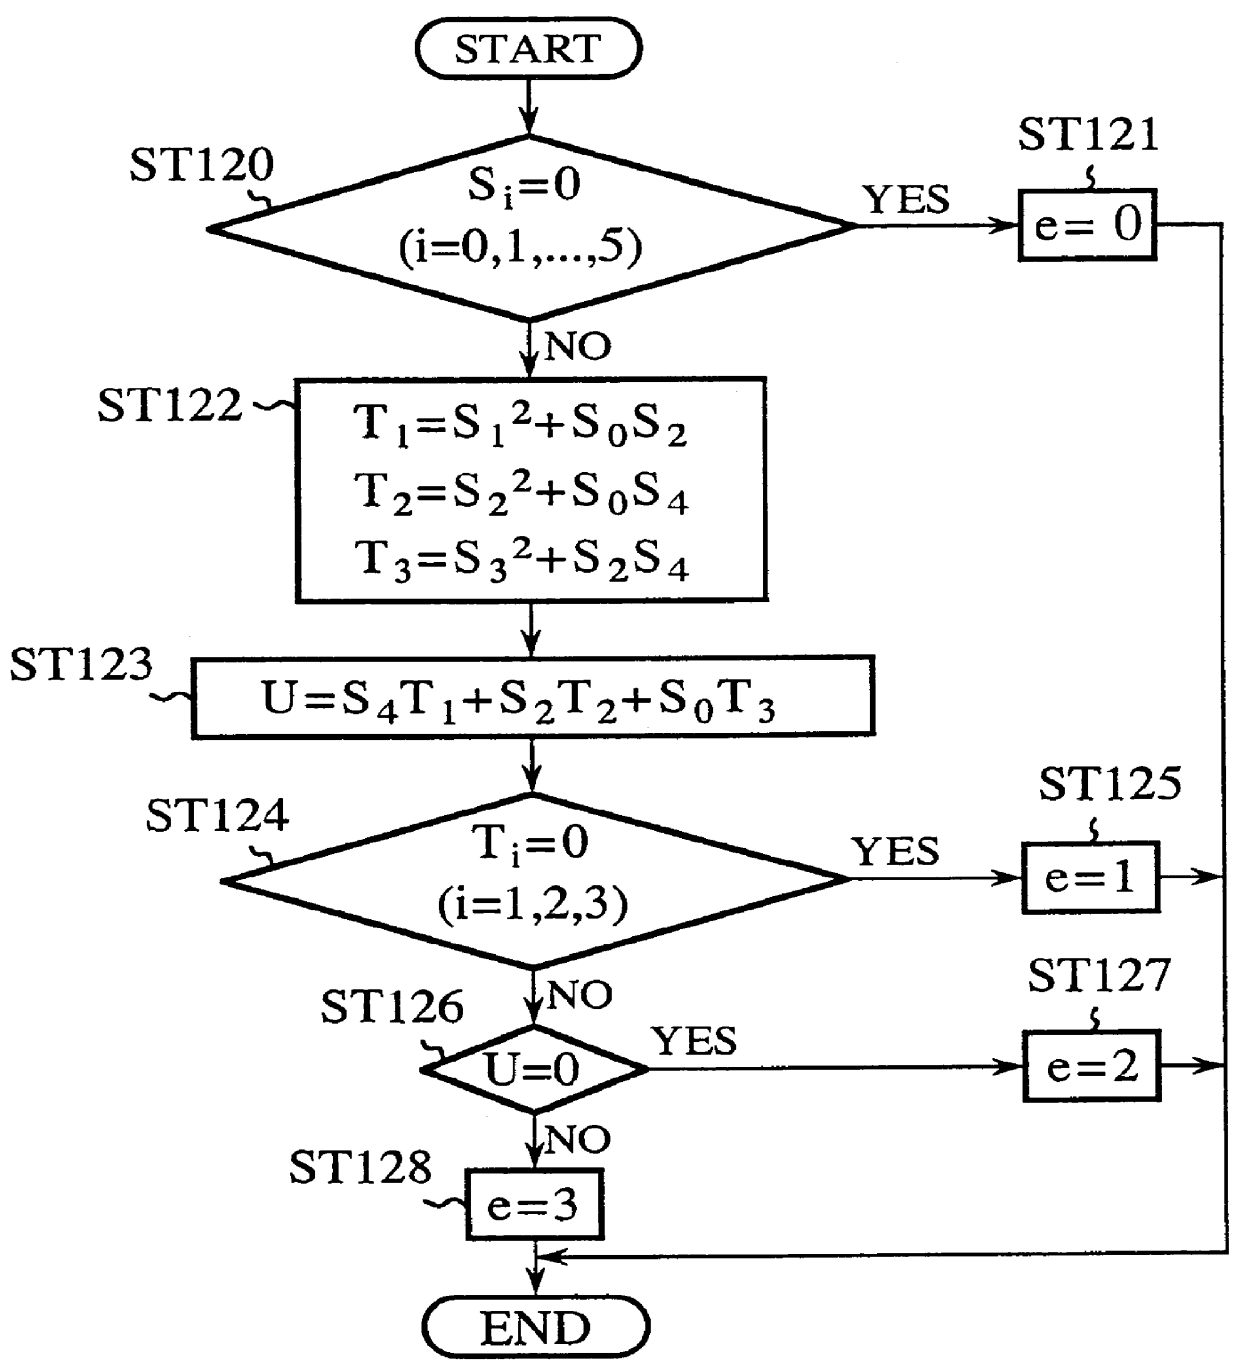 Error correcting decoding apparatus of extended Reed-Solomon code, and error correcting apparatus of singly or doubly extended Reed-Solomon codes